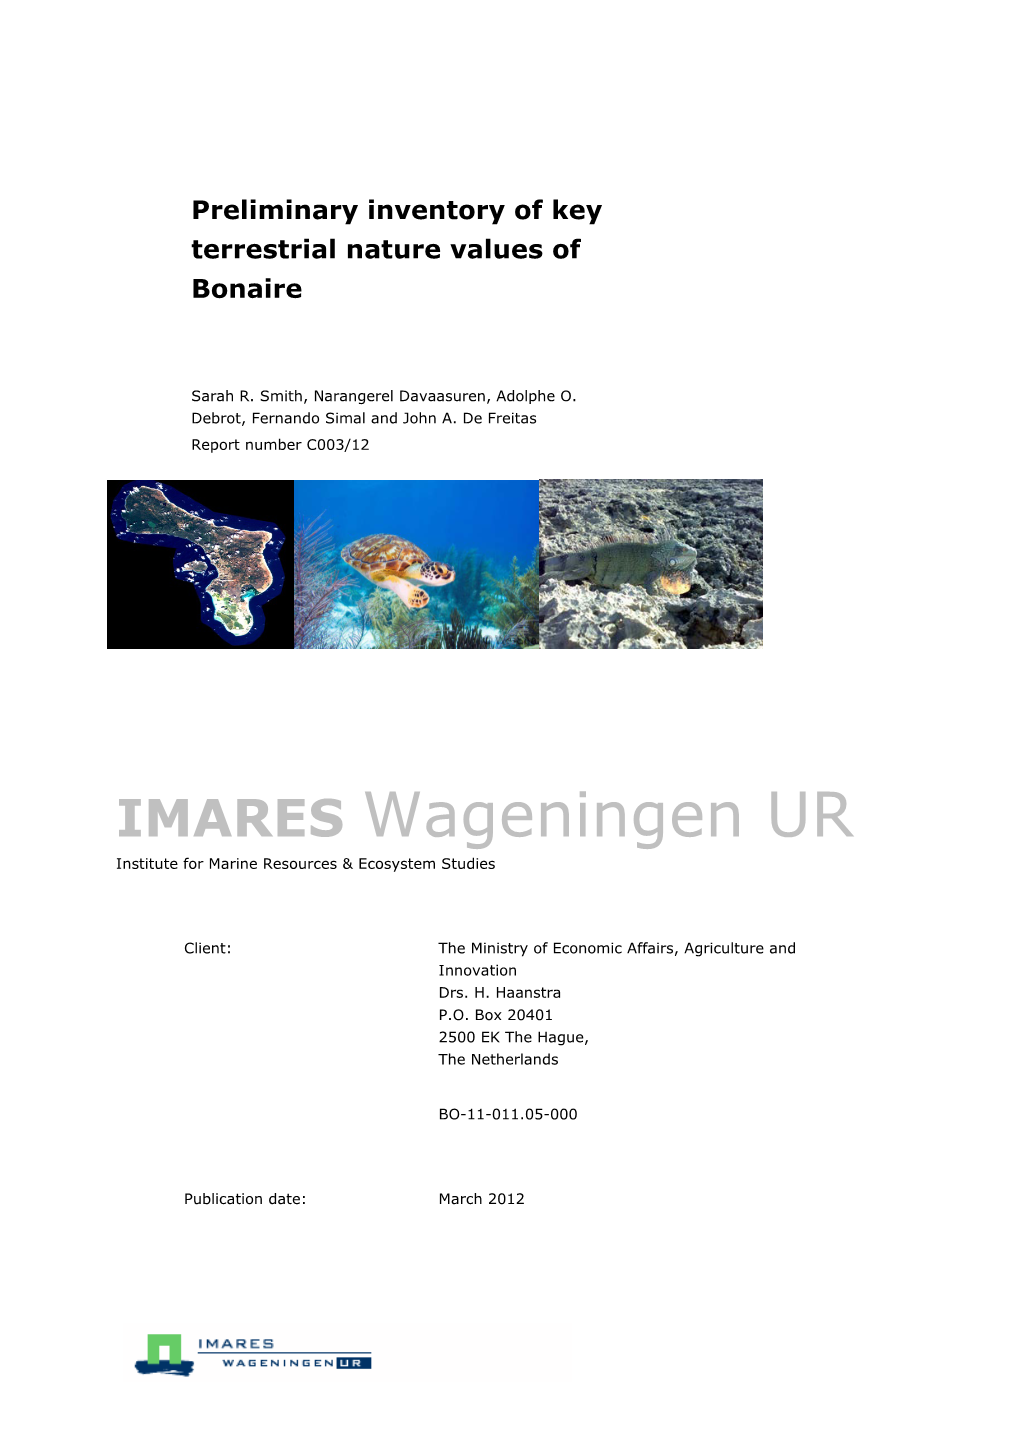 IMARES Wageningen UR Institute for Marine Resources & Ecosystem Studies